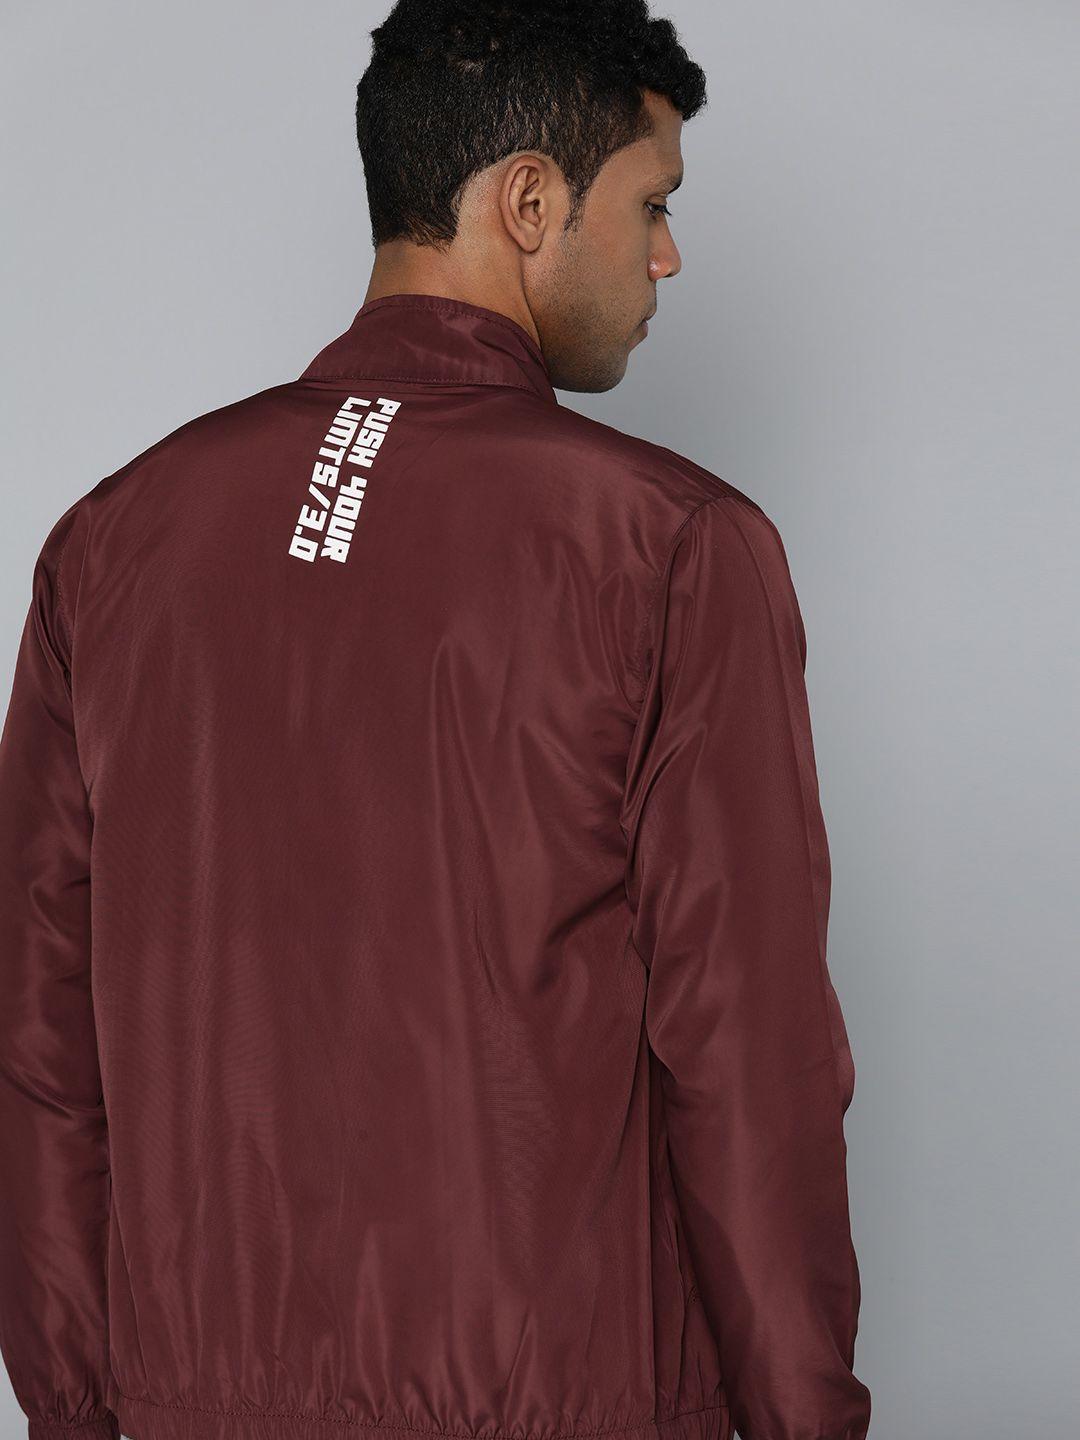 hrx-by-hrithik-roshan-rapid-dry-brand-logo-print-detail-tailored-jacket